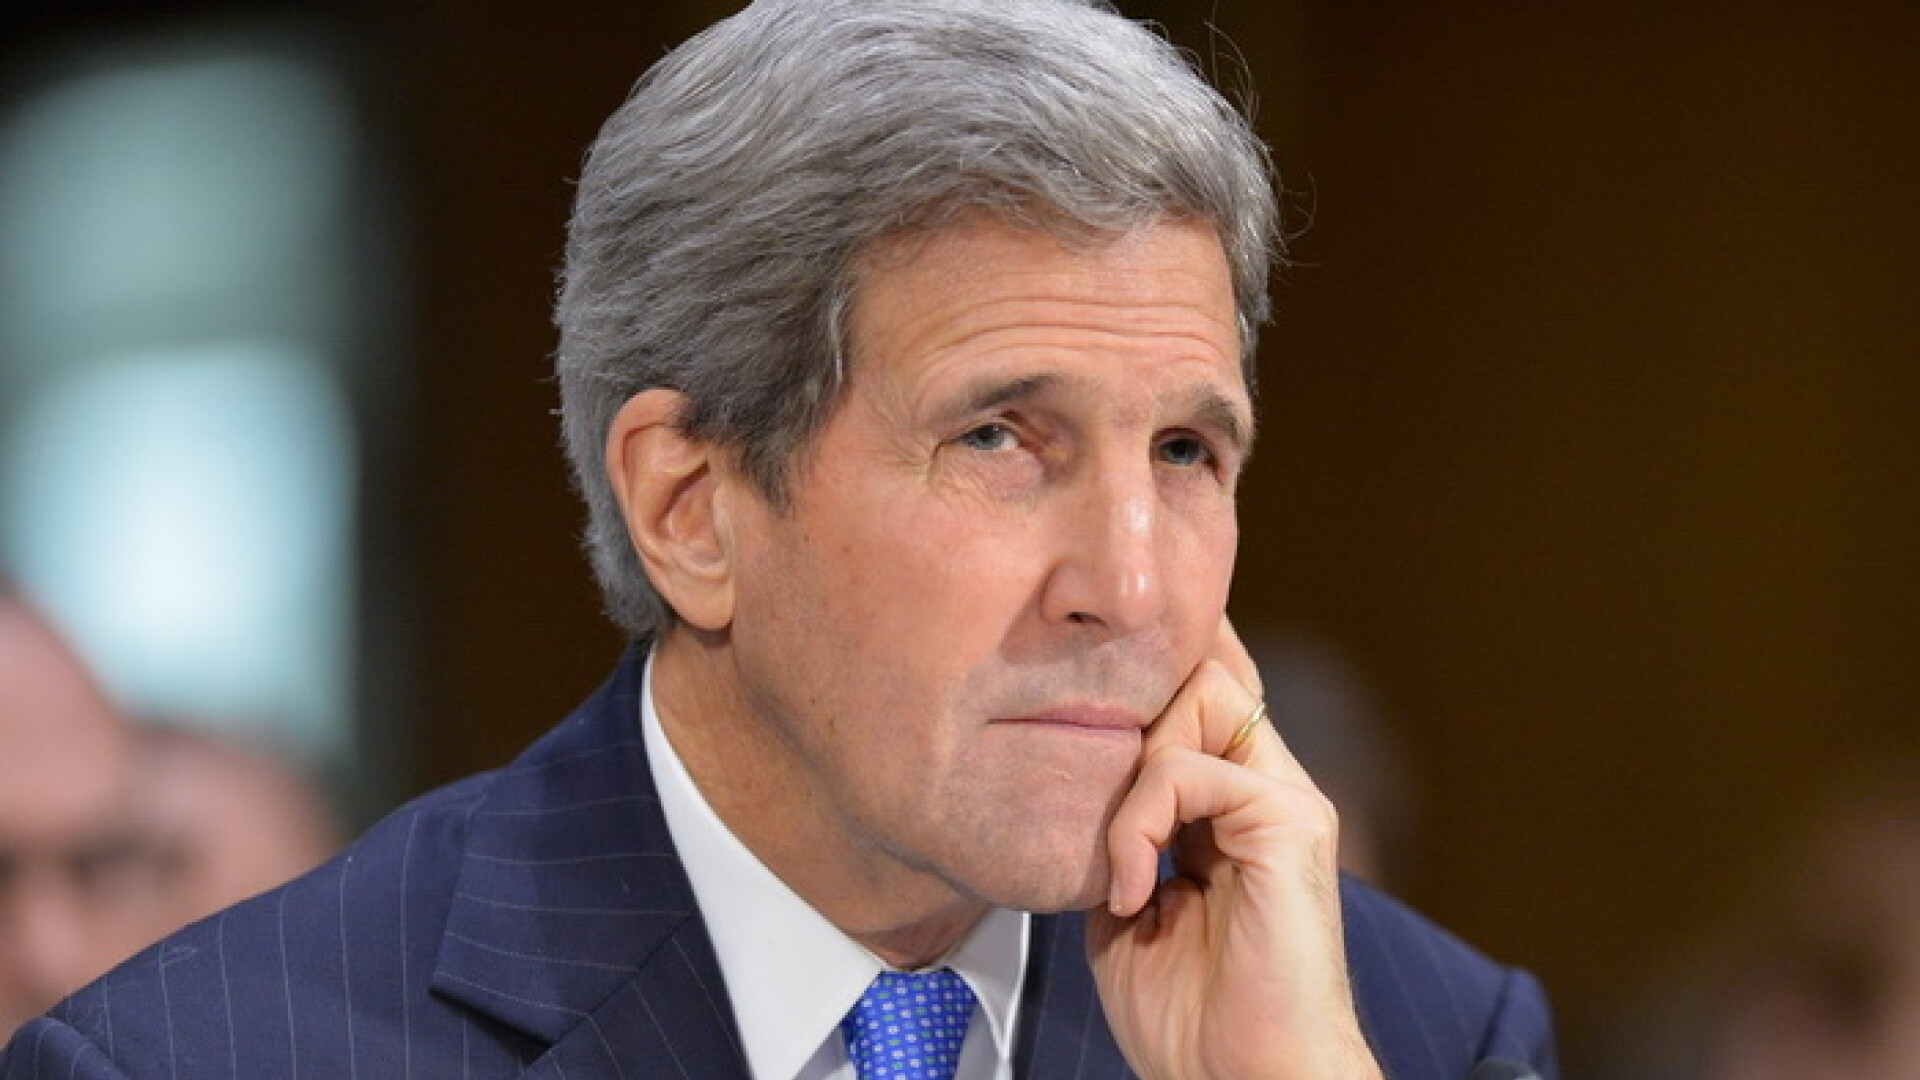 John Kerry - Agerpres